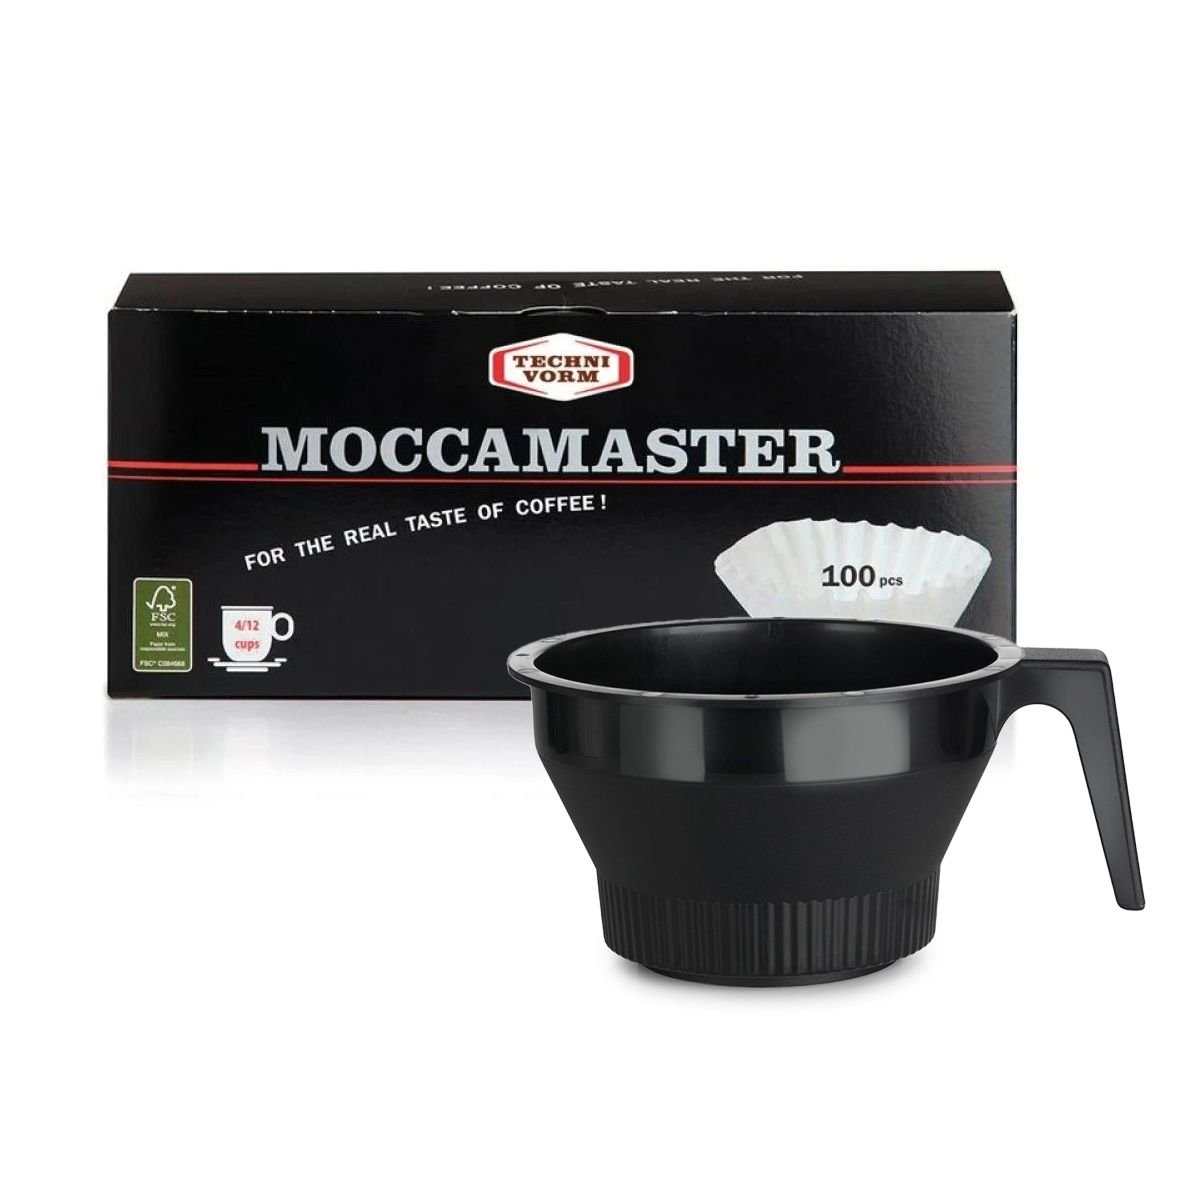 CDT Manual-Adjust Drip-Stop 60oz Coffee Maker - Brushed Silver, Thermal  Carafe, Moccamaster